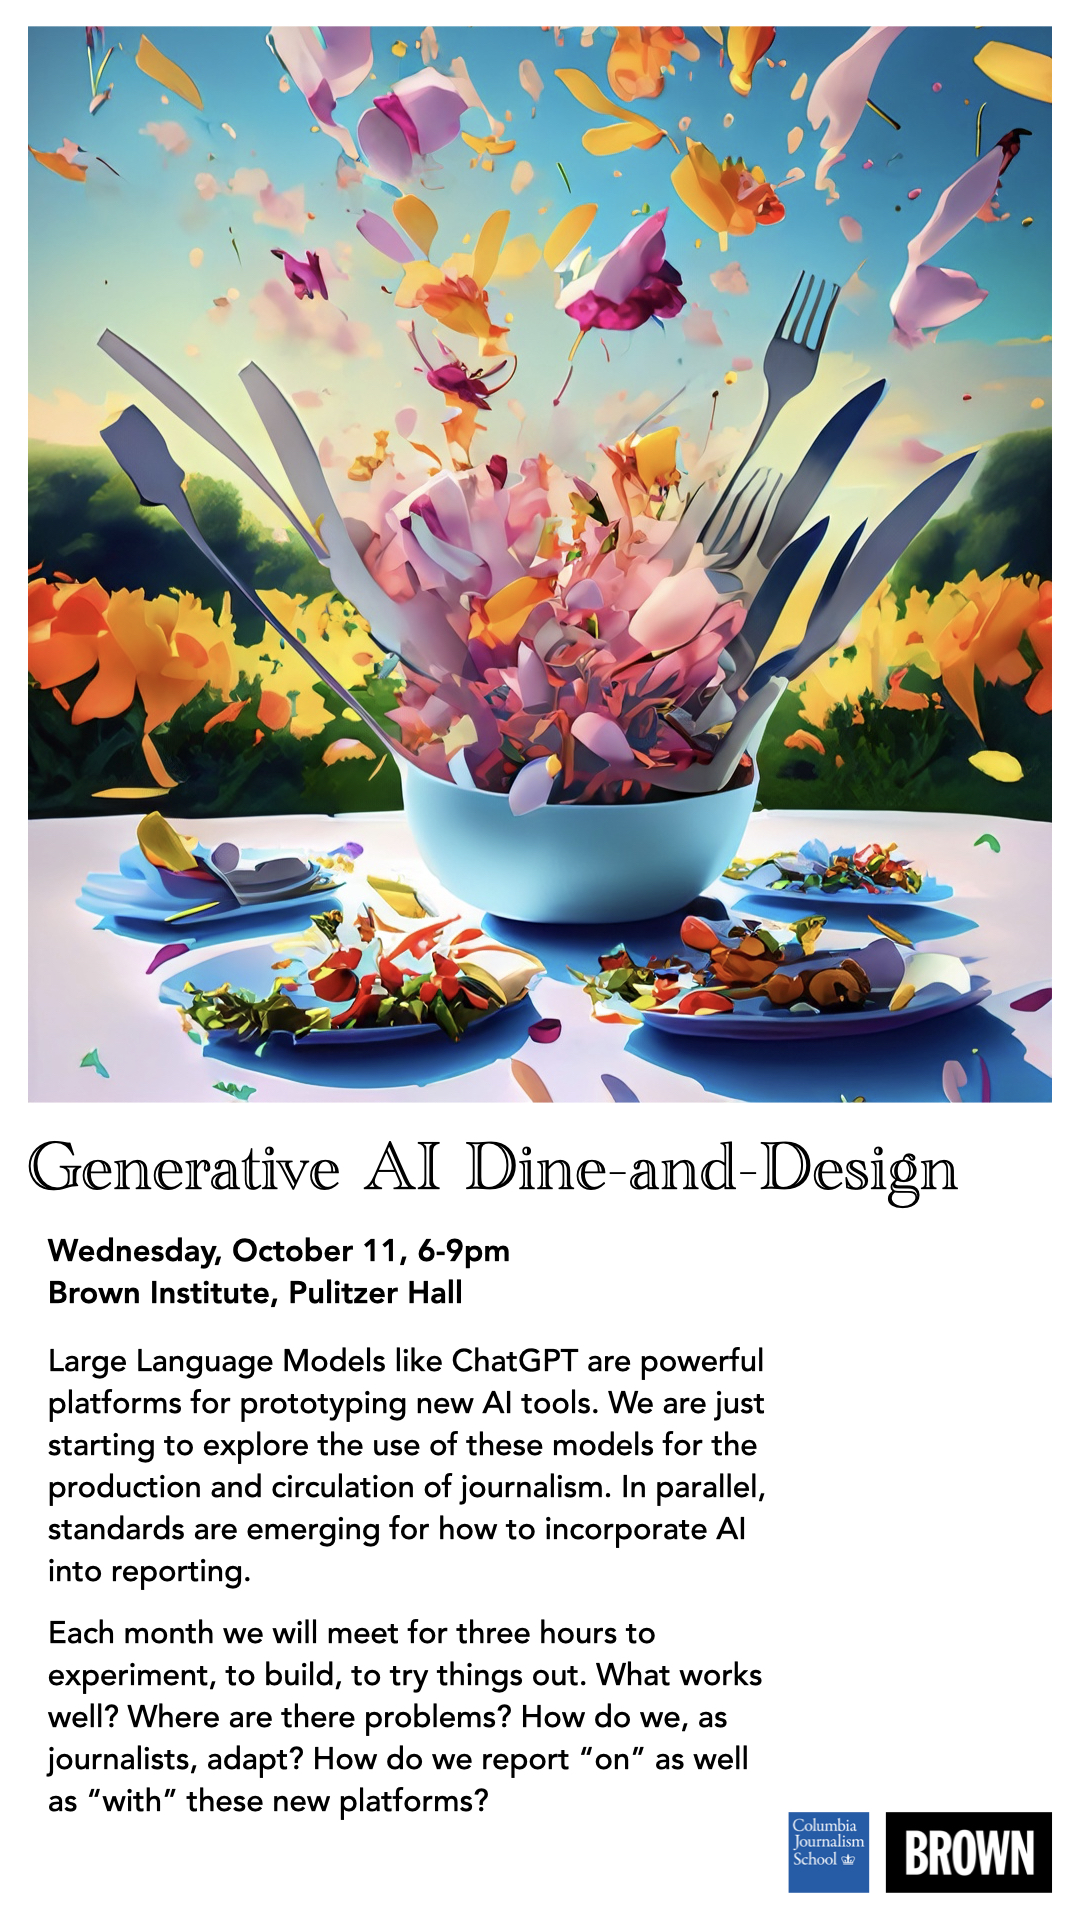 Dine and Design 2 (event)